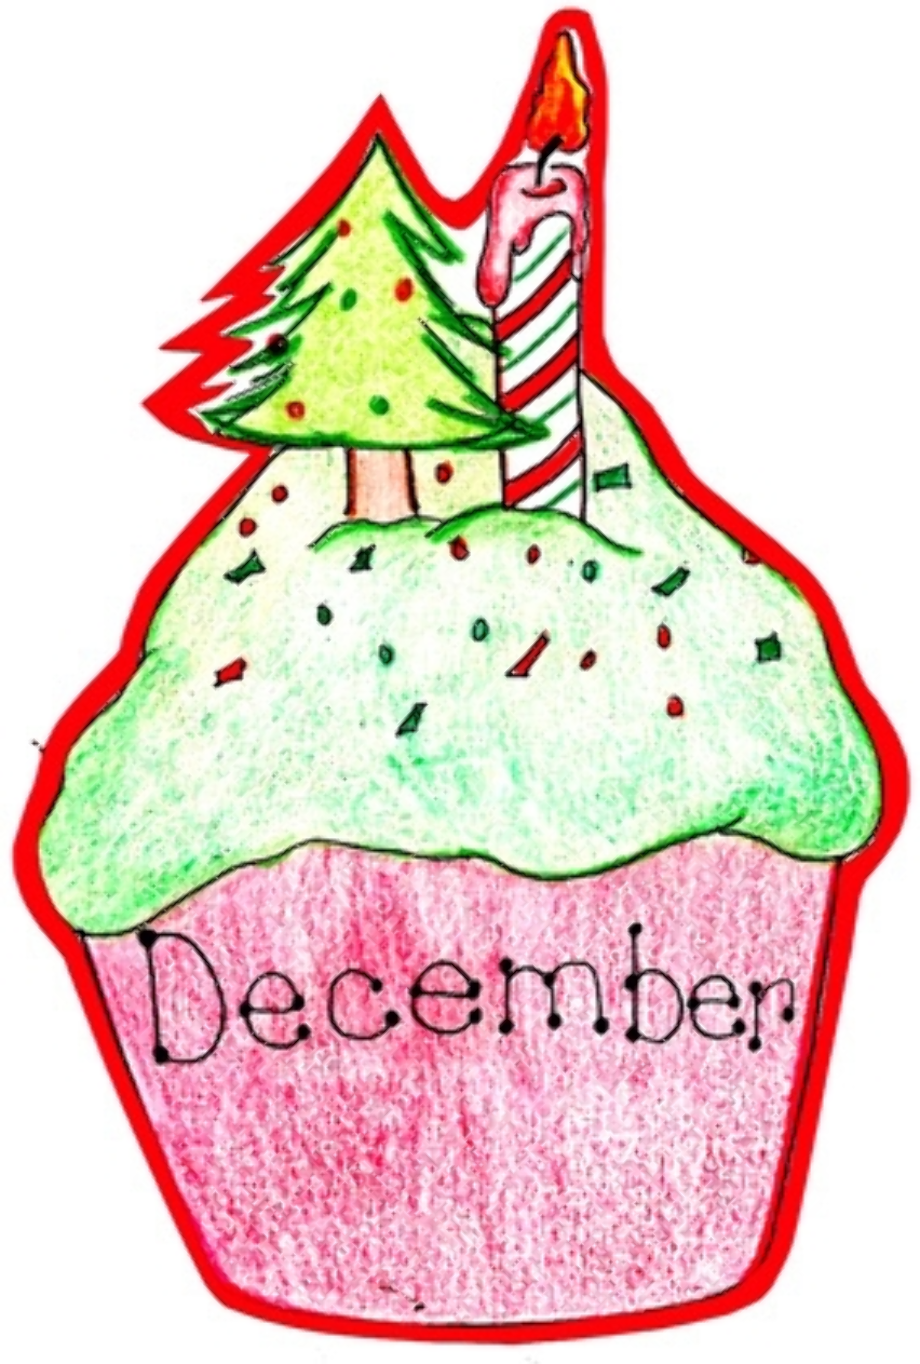 december clipart cupcake